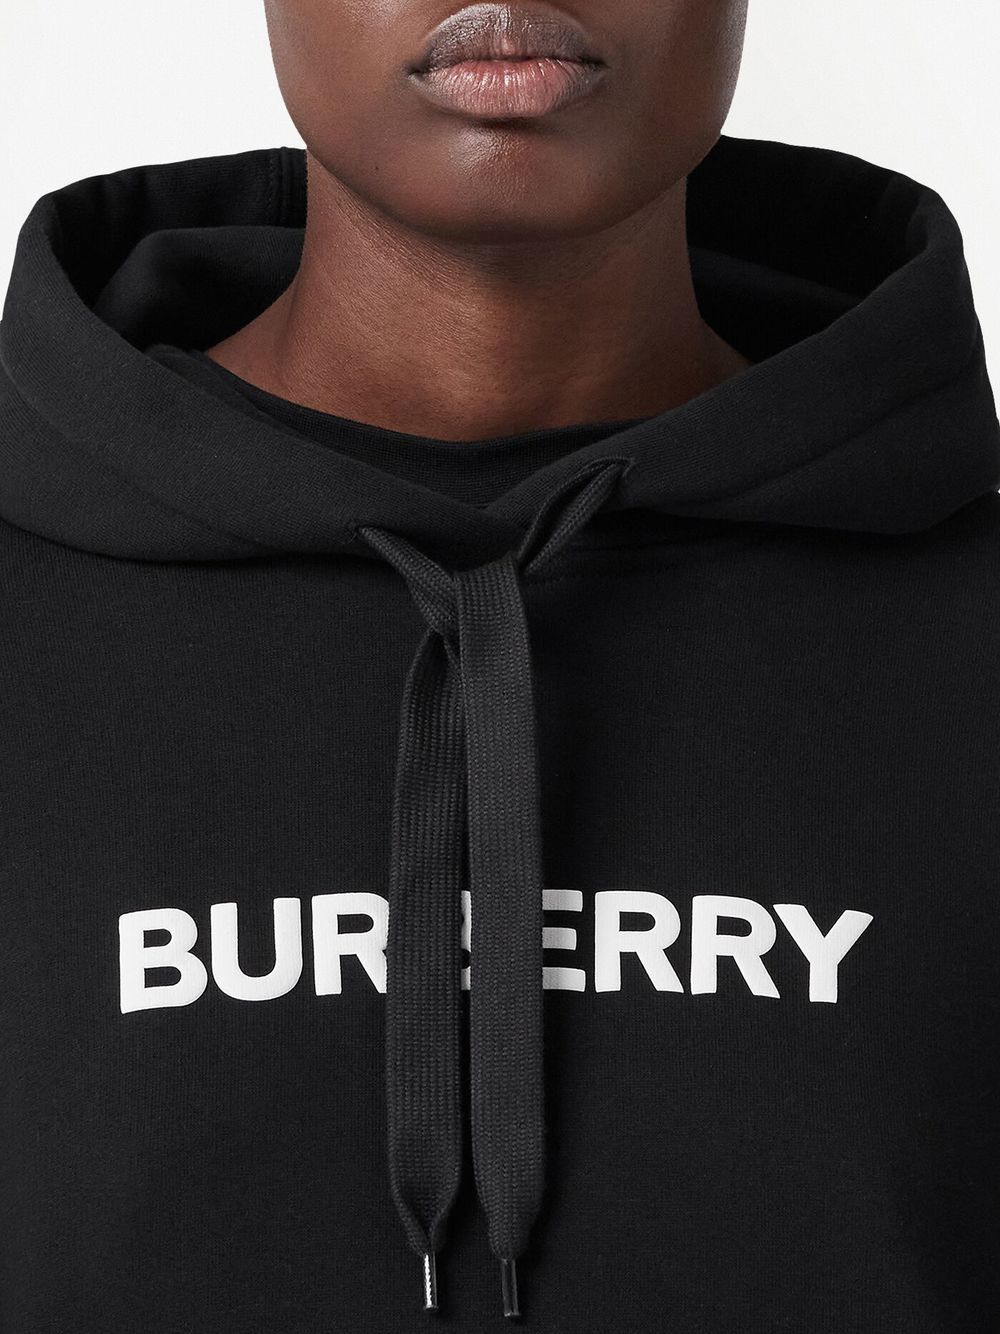 Burberry Sweaters Black